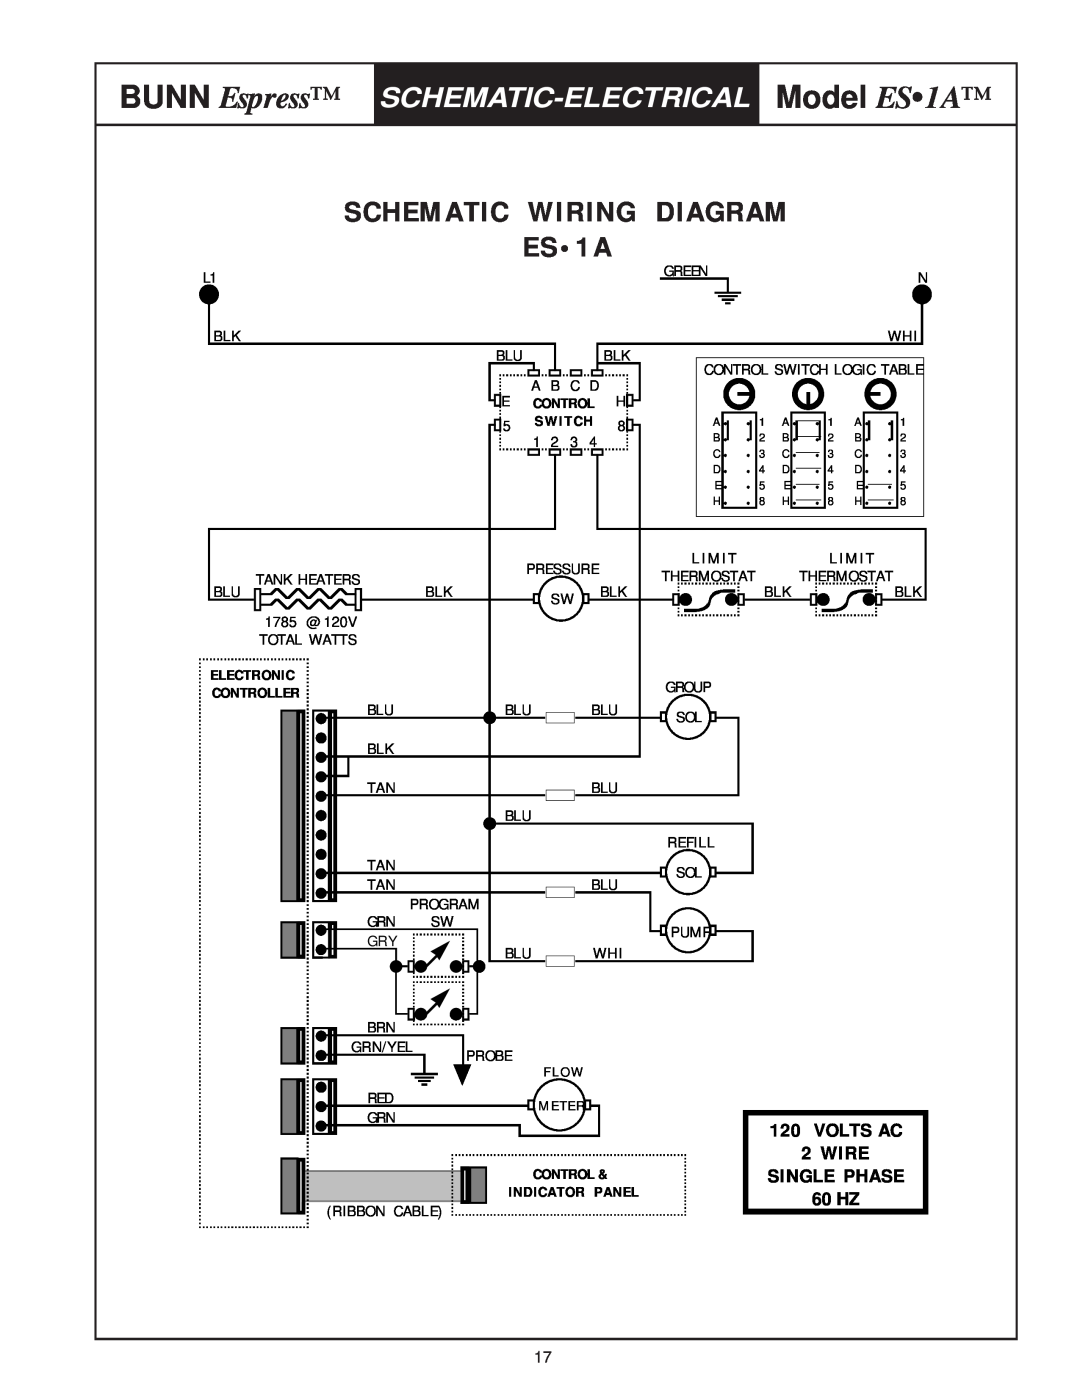 Bunn Schematic Wiring, BUNN Espress, Model ES1A, ES 1A, Schematic-Electrical, Diagram, Volts Ac, Wire, Single Phase 